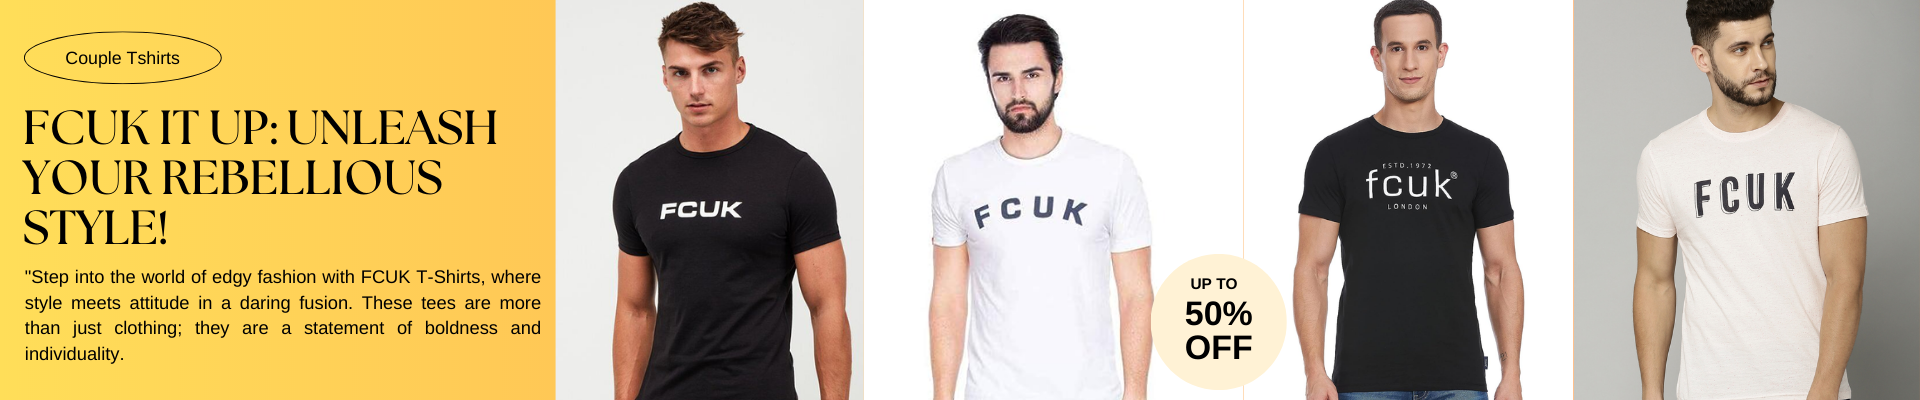 fcuk tshirts, fcuk t shirt mens, fcuk t shirt price, fcuk t shirts sale, fcuk t shirt white